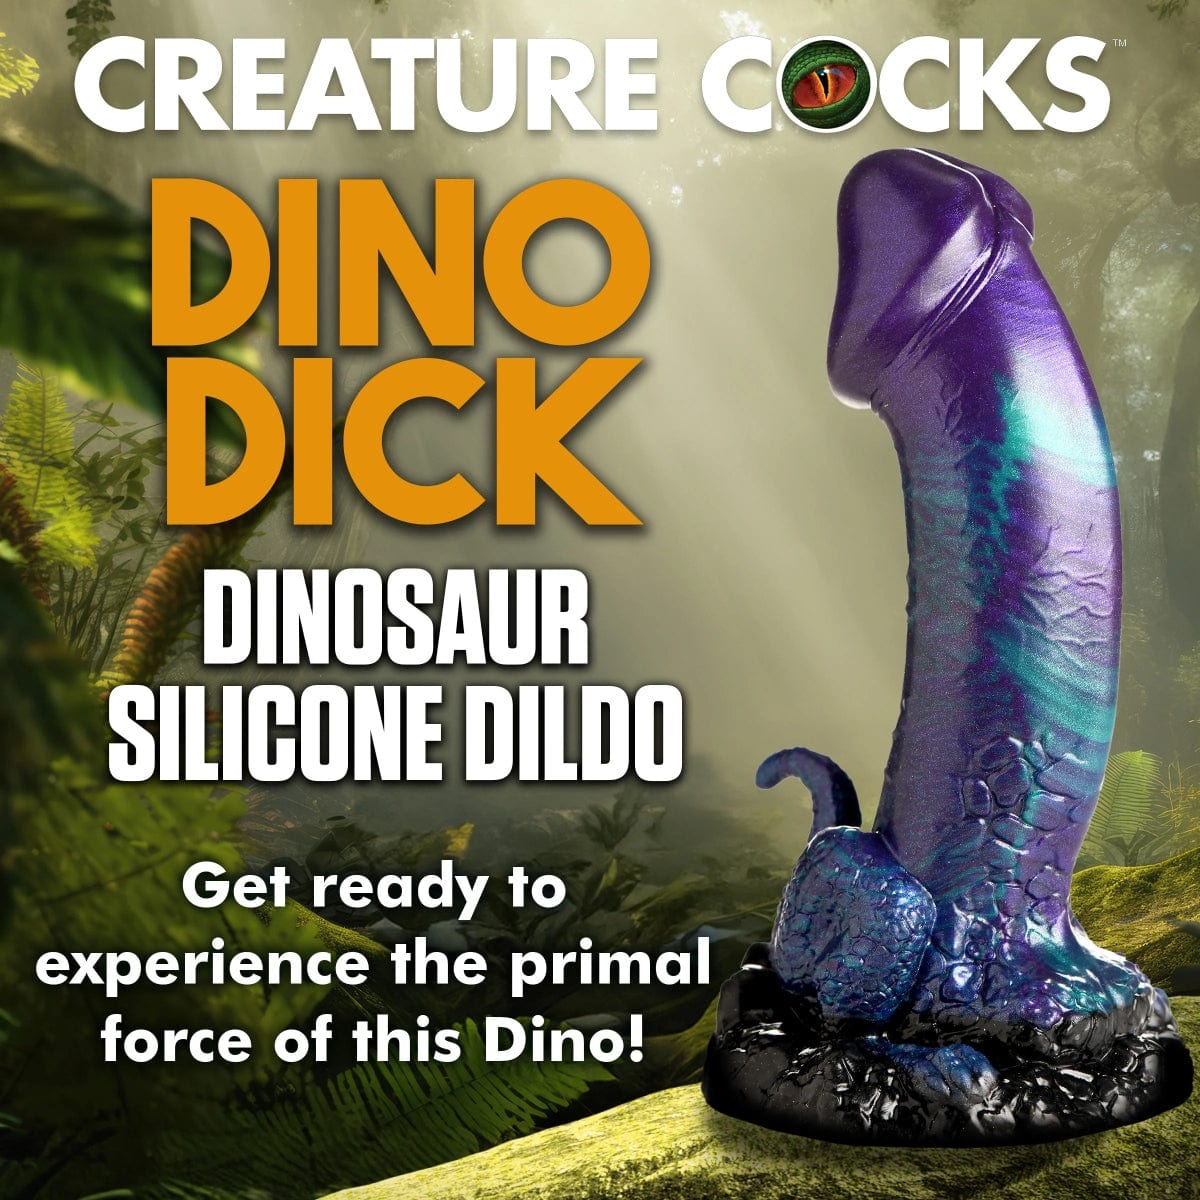 Creature Cocks - Dino Dick Dinosaur Silicone Dildo | 7.5 inches creature cocks - For Me To Love